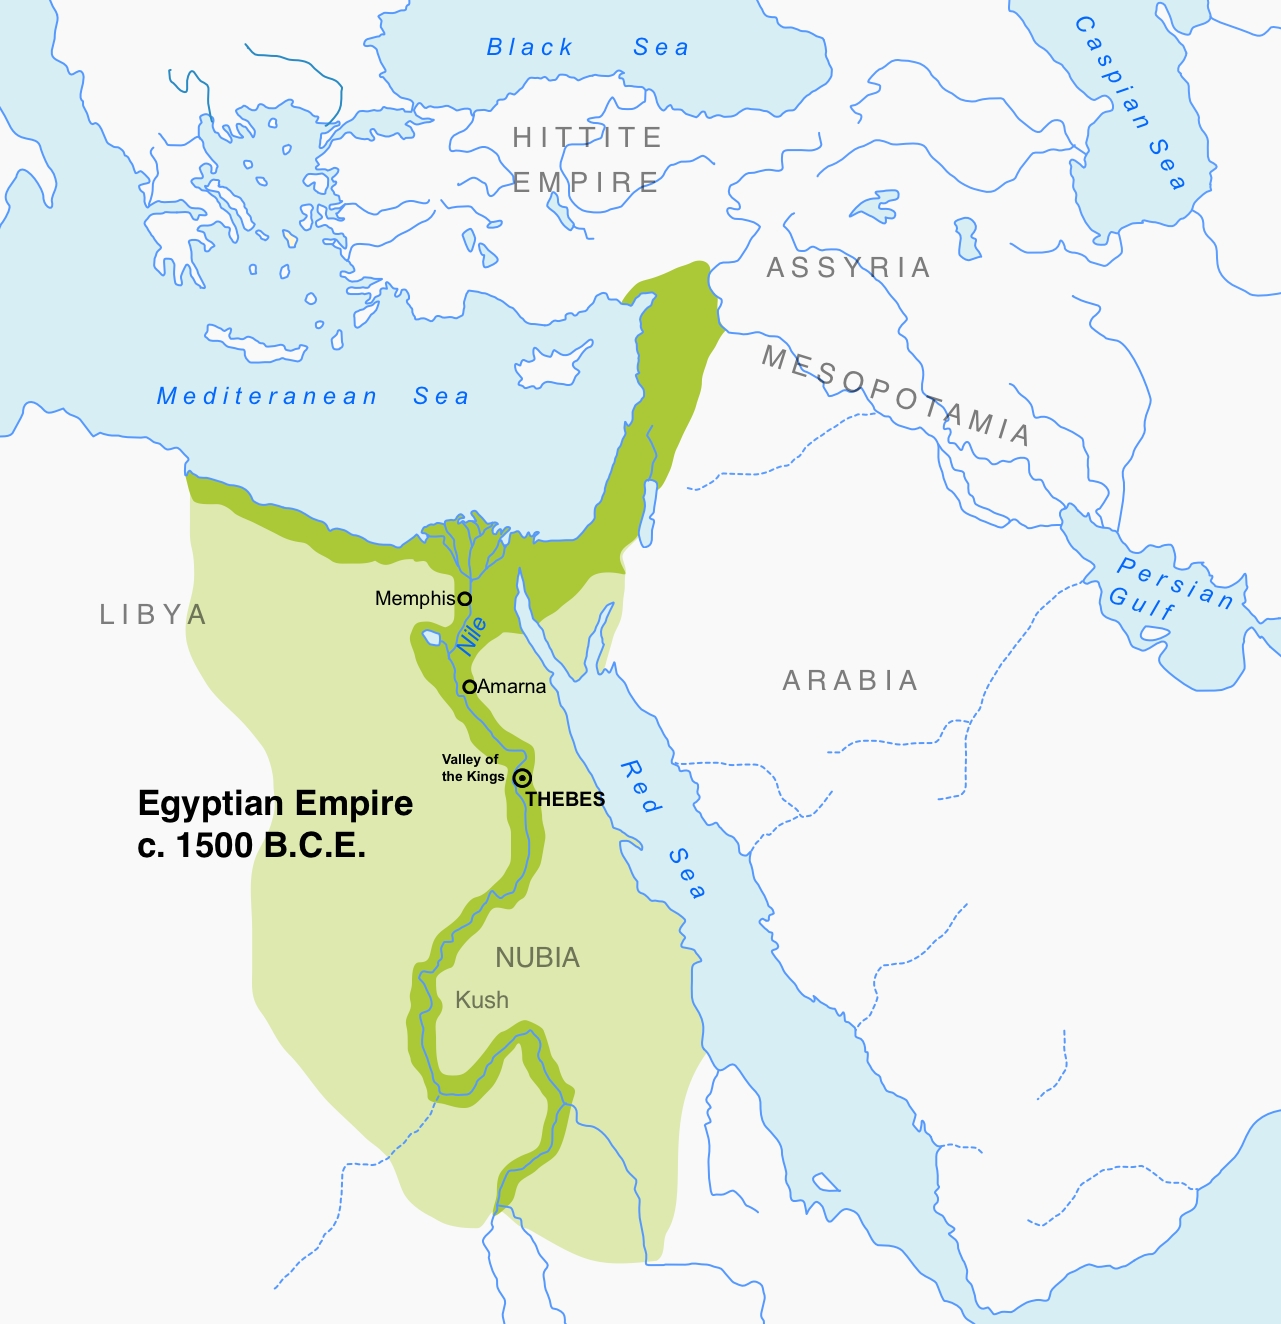 Egyptian Empire, c. 1500 B.C.E.